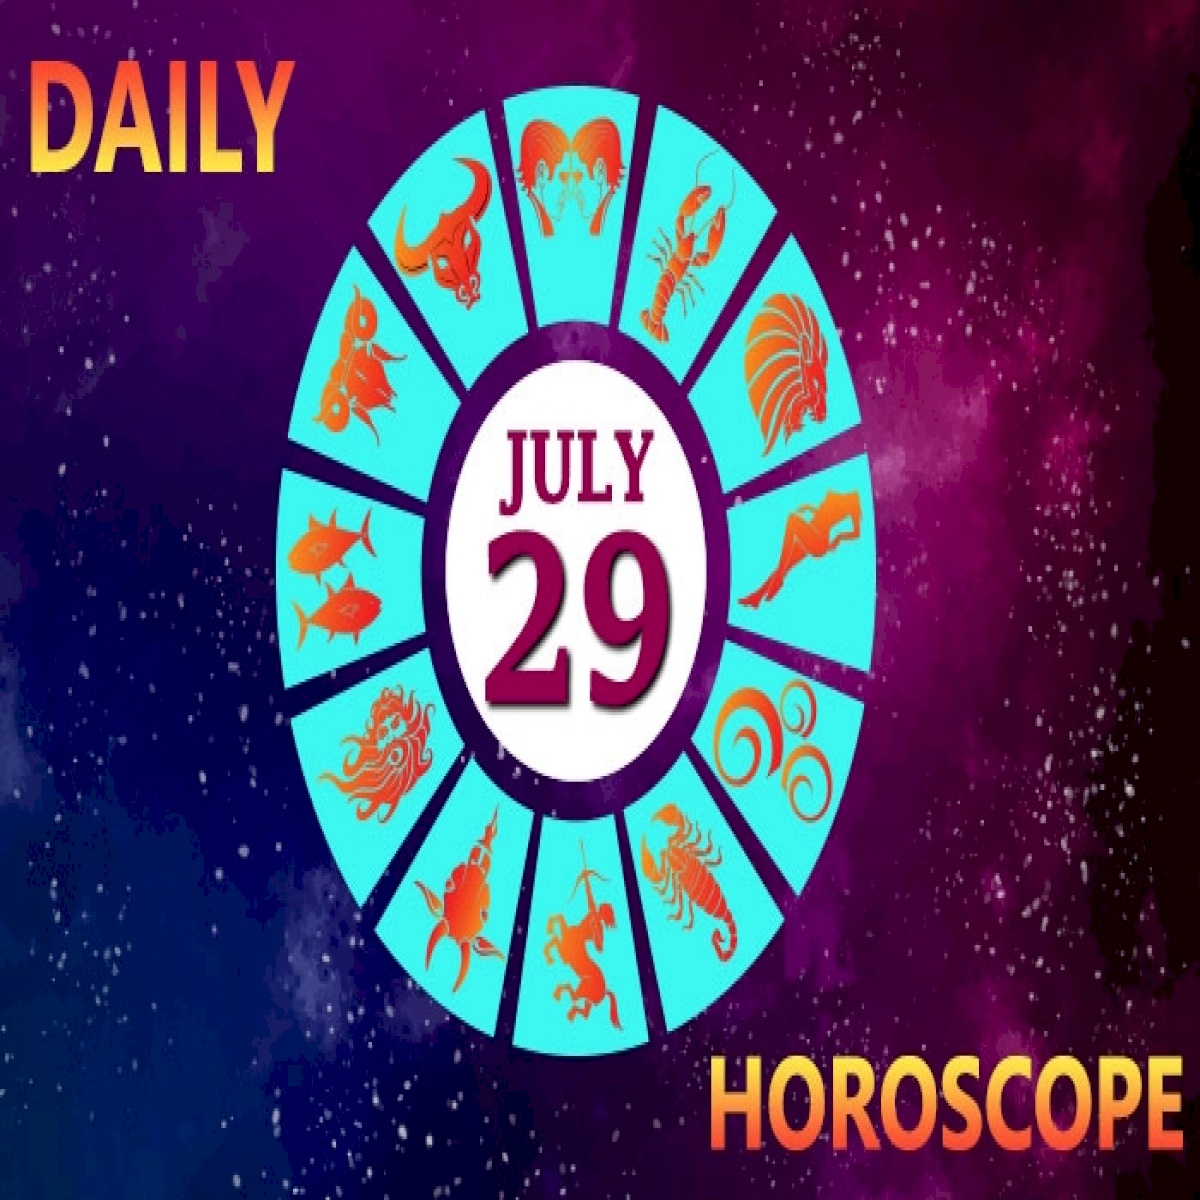 July 26 Zodiac - Daily horoscope for july 25: - Muncrat Wall